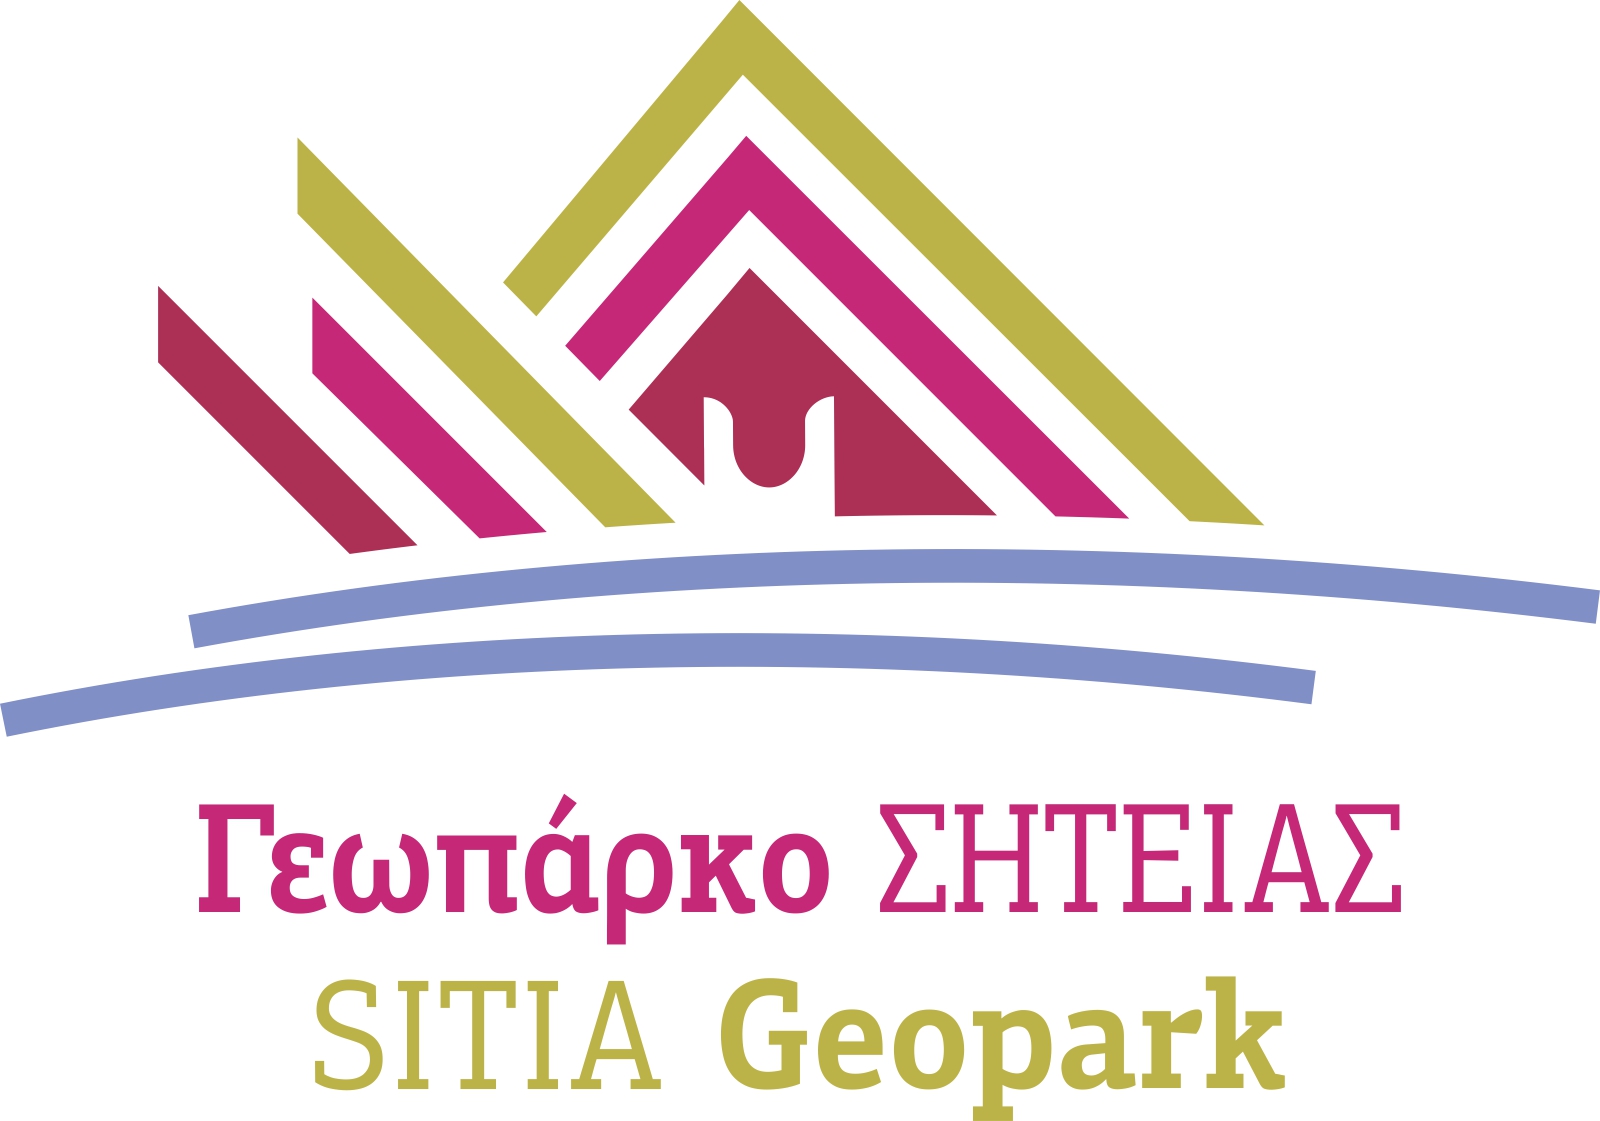 Sitia Geopark